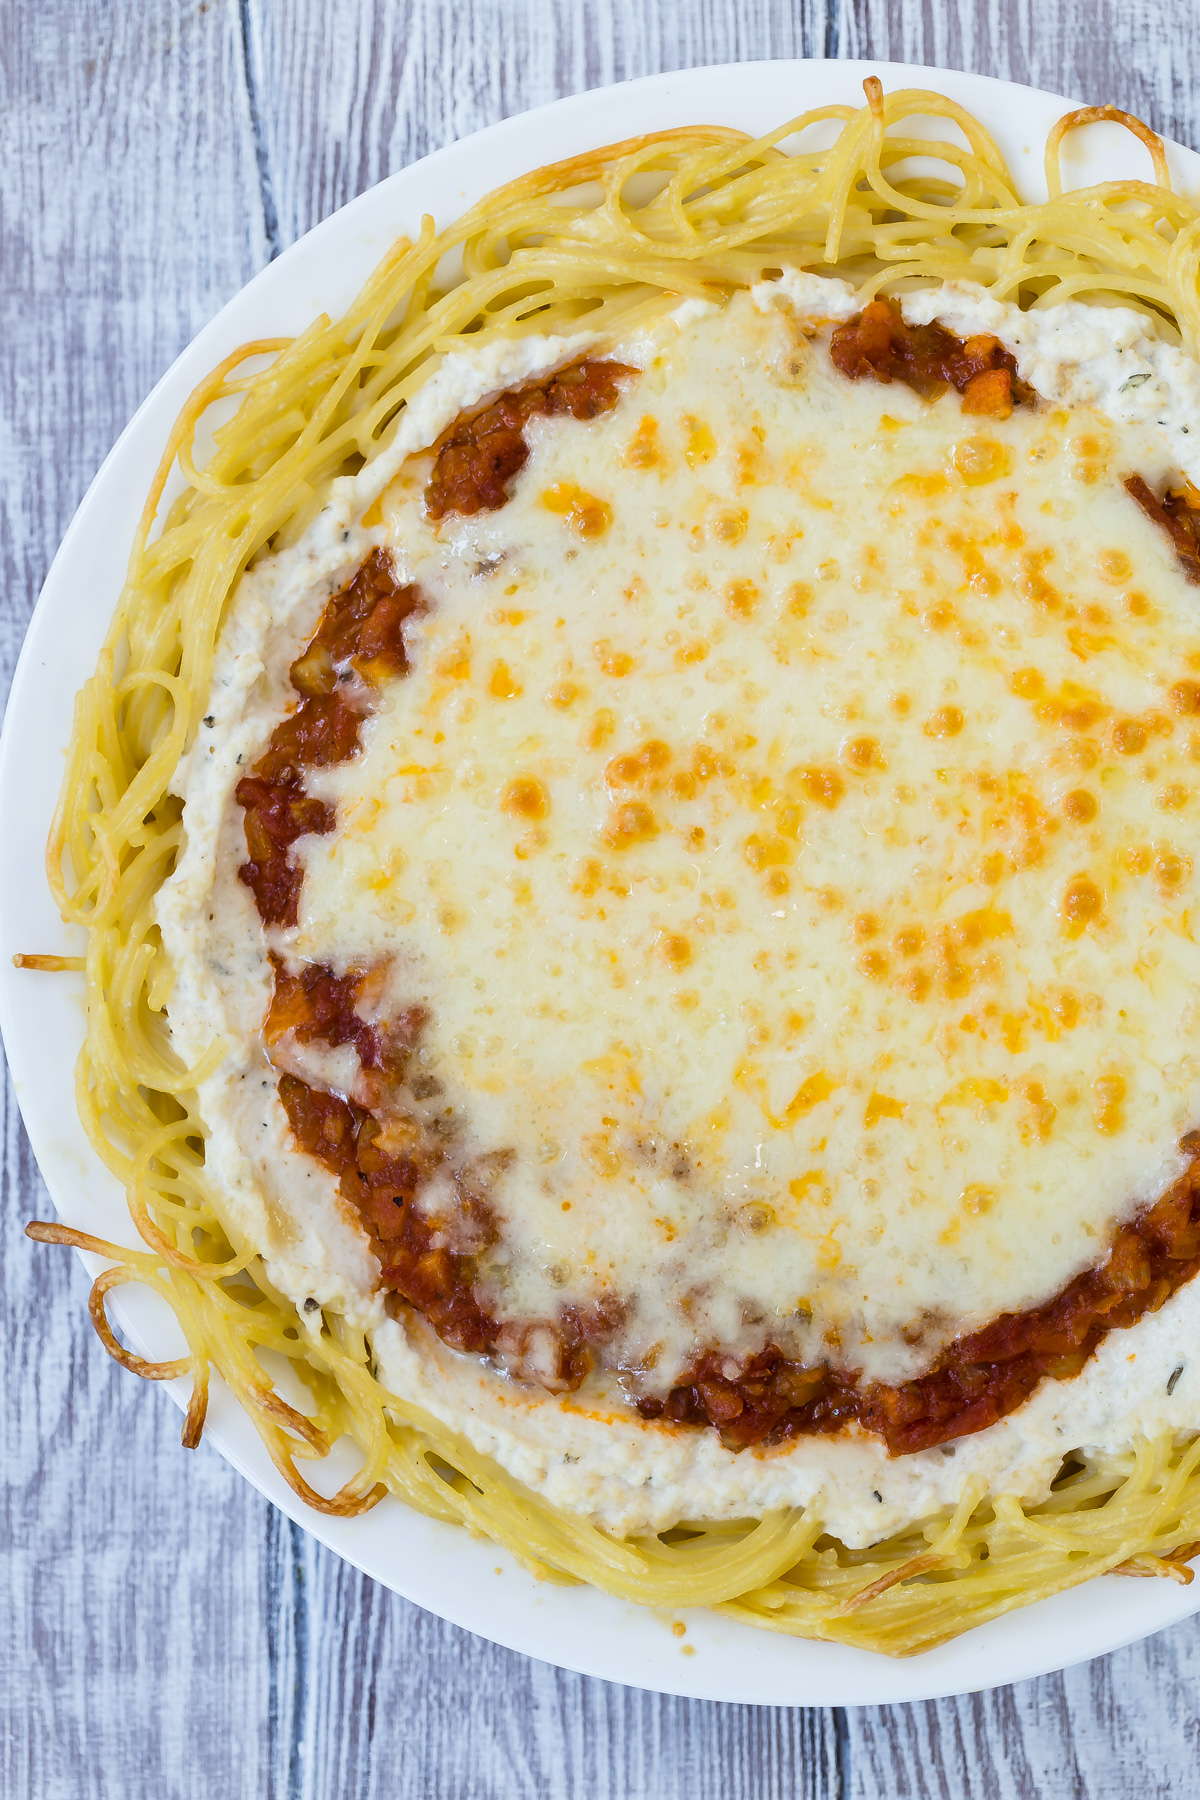 Vegetarian Spaghetti Pie recipe from Weelicious.com